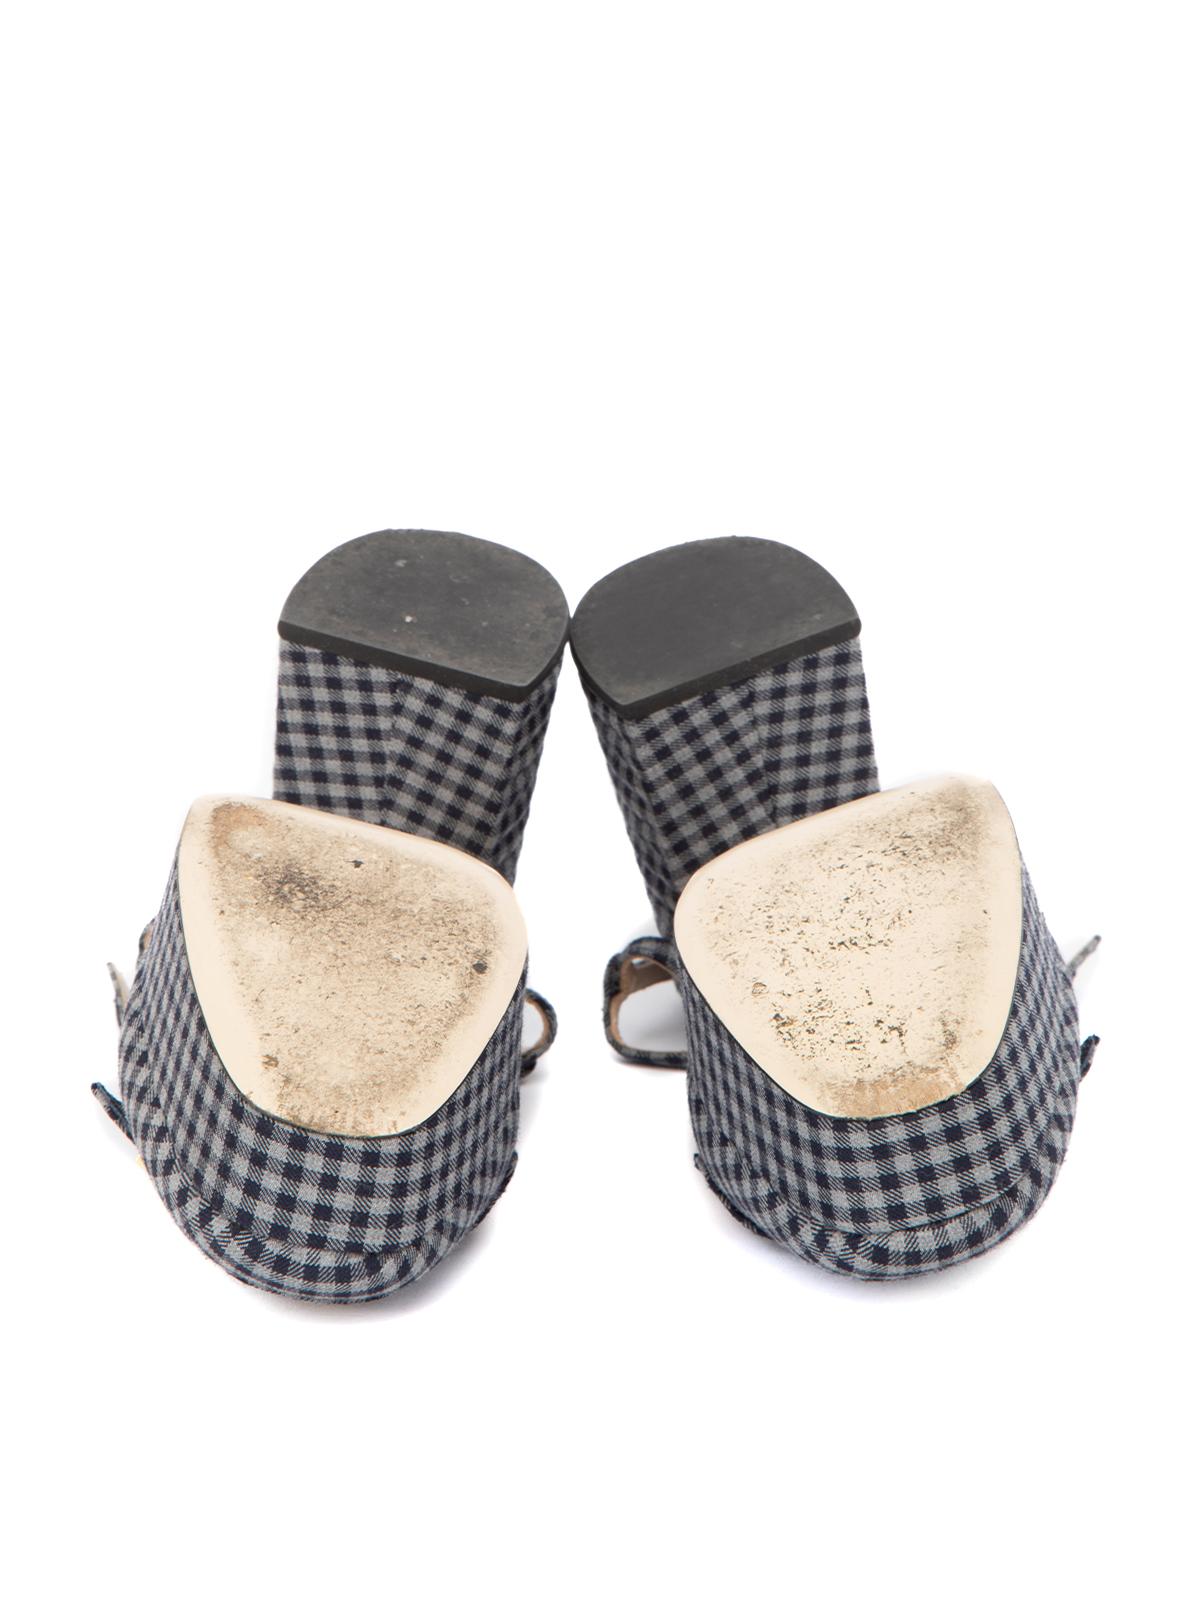 Pre-Loved Fendi Women's Gingham Vichy Promenade Moccasin Sandals 2